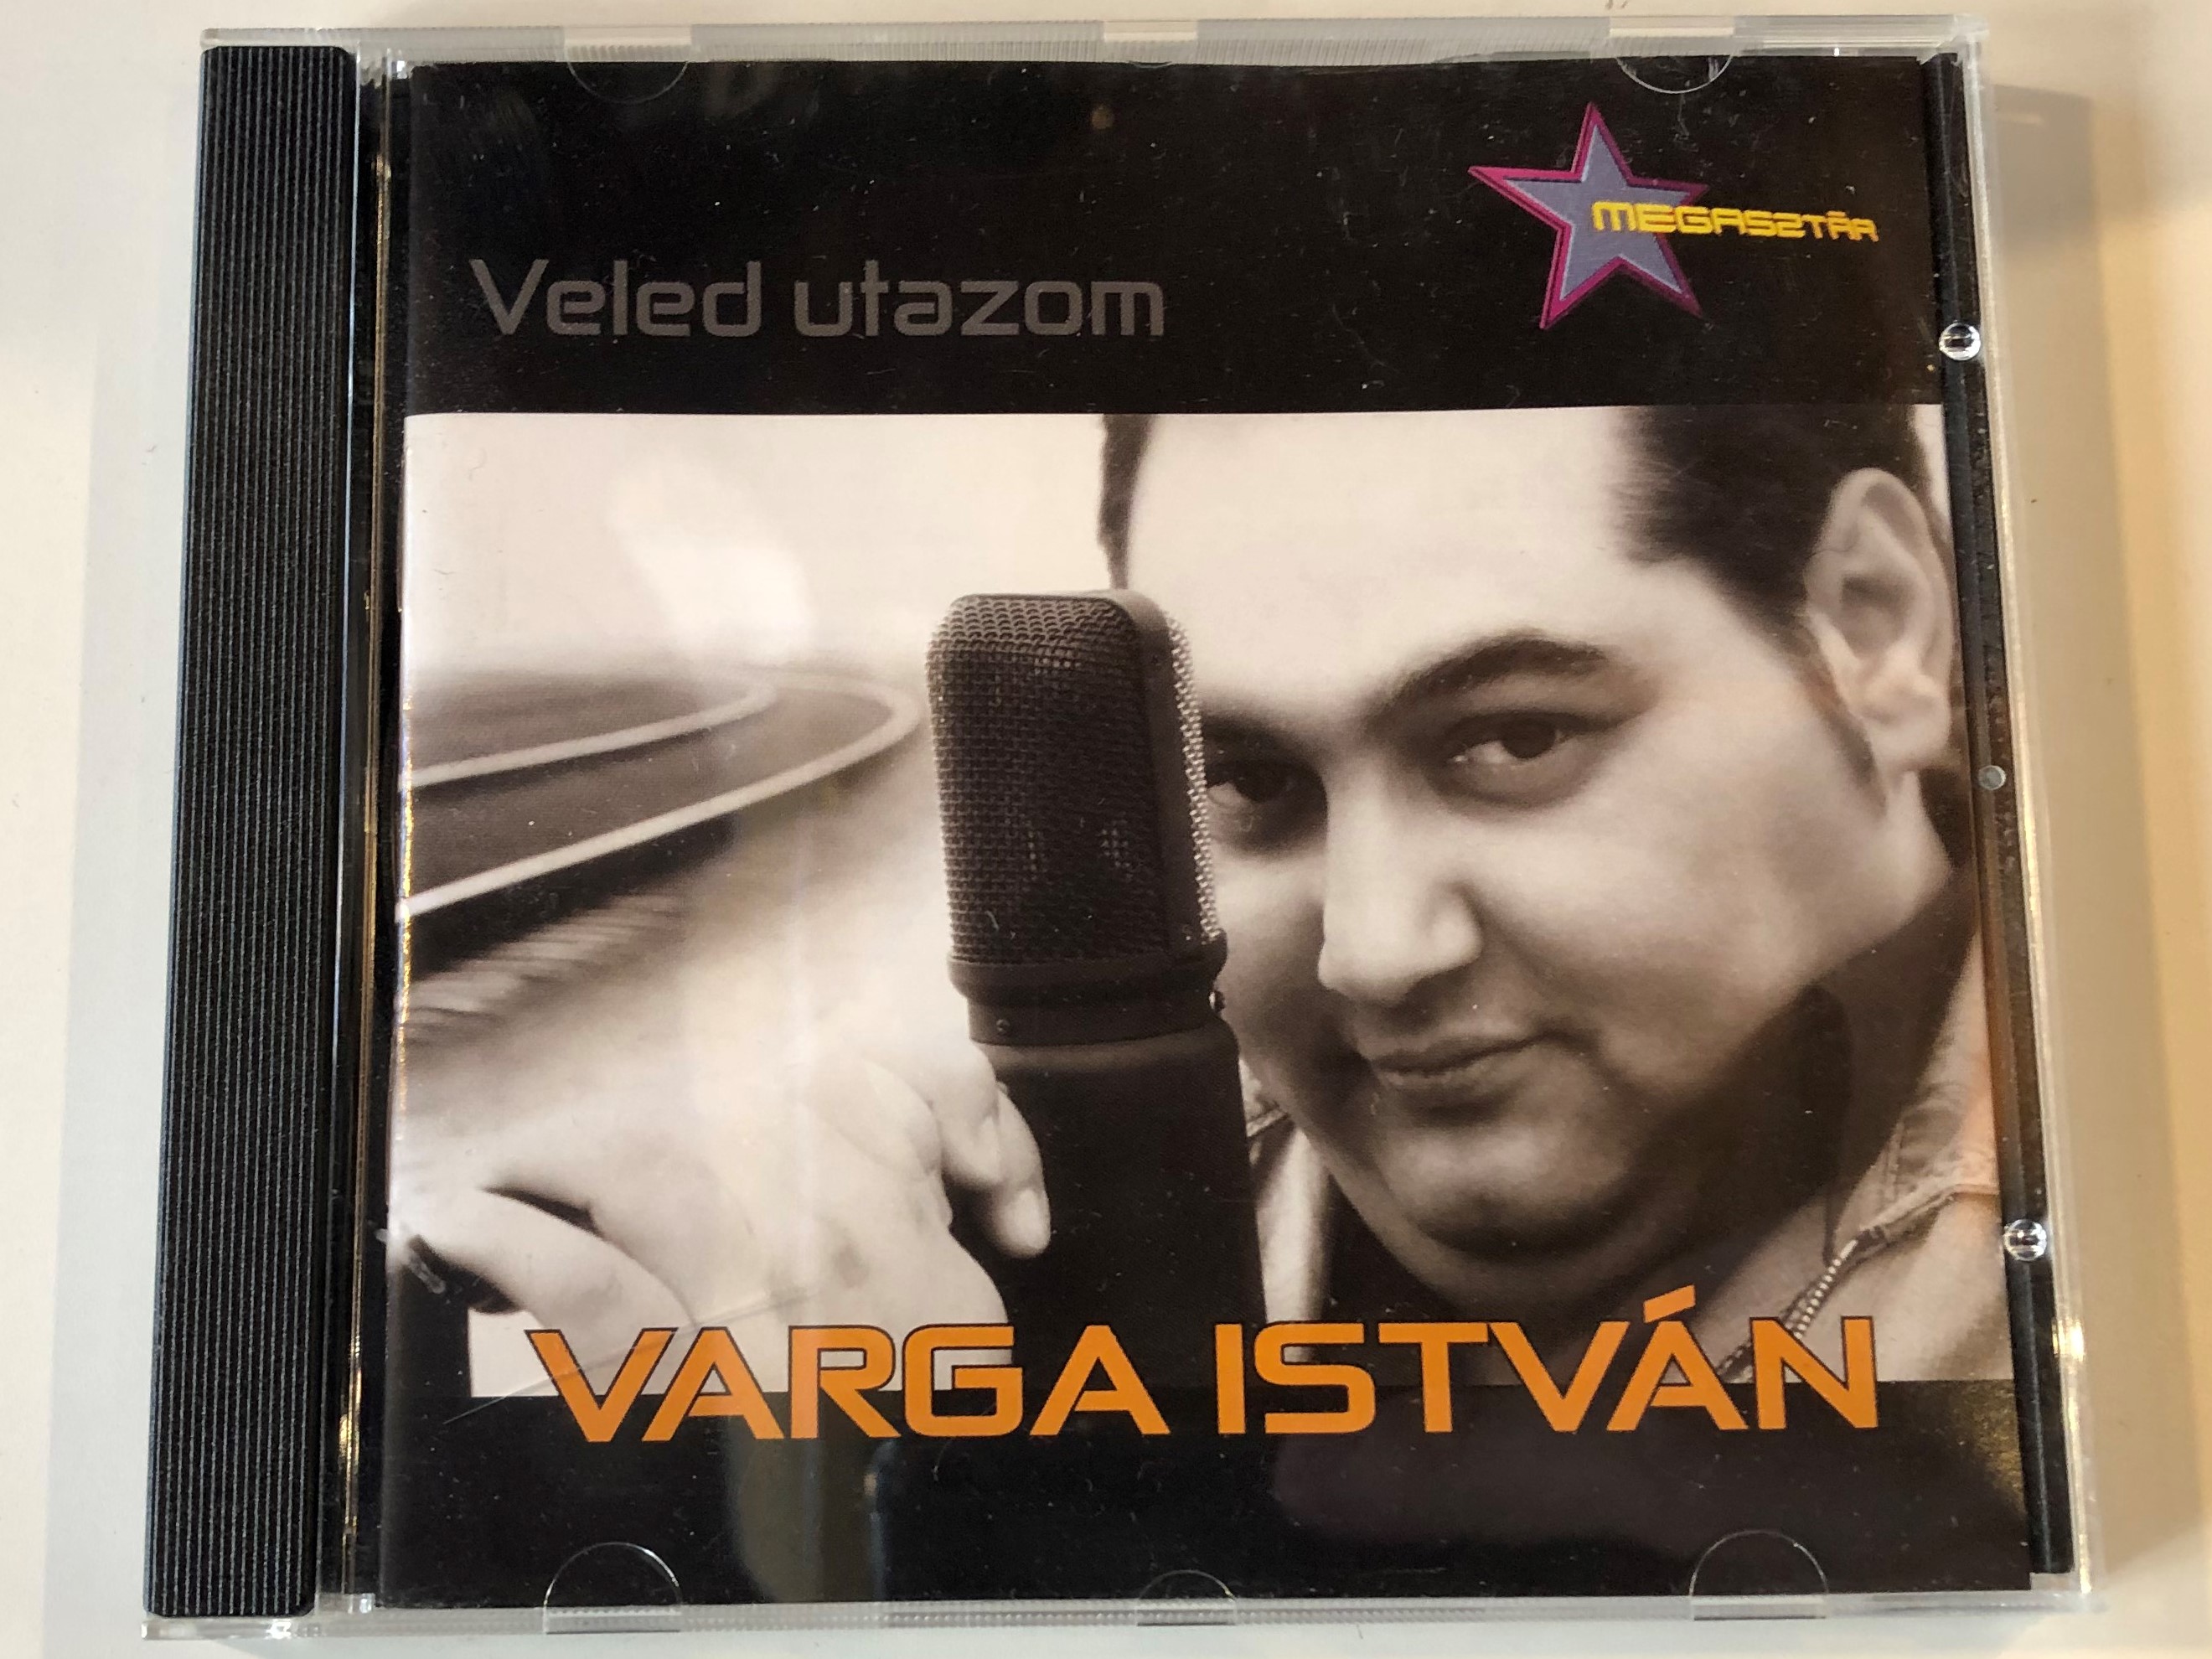 veled-utazom-varga-istv-n-universal-music-group-audio-cd-2007-174632-6-1-.jpg